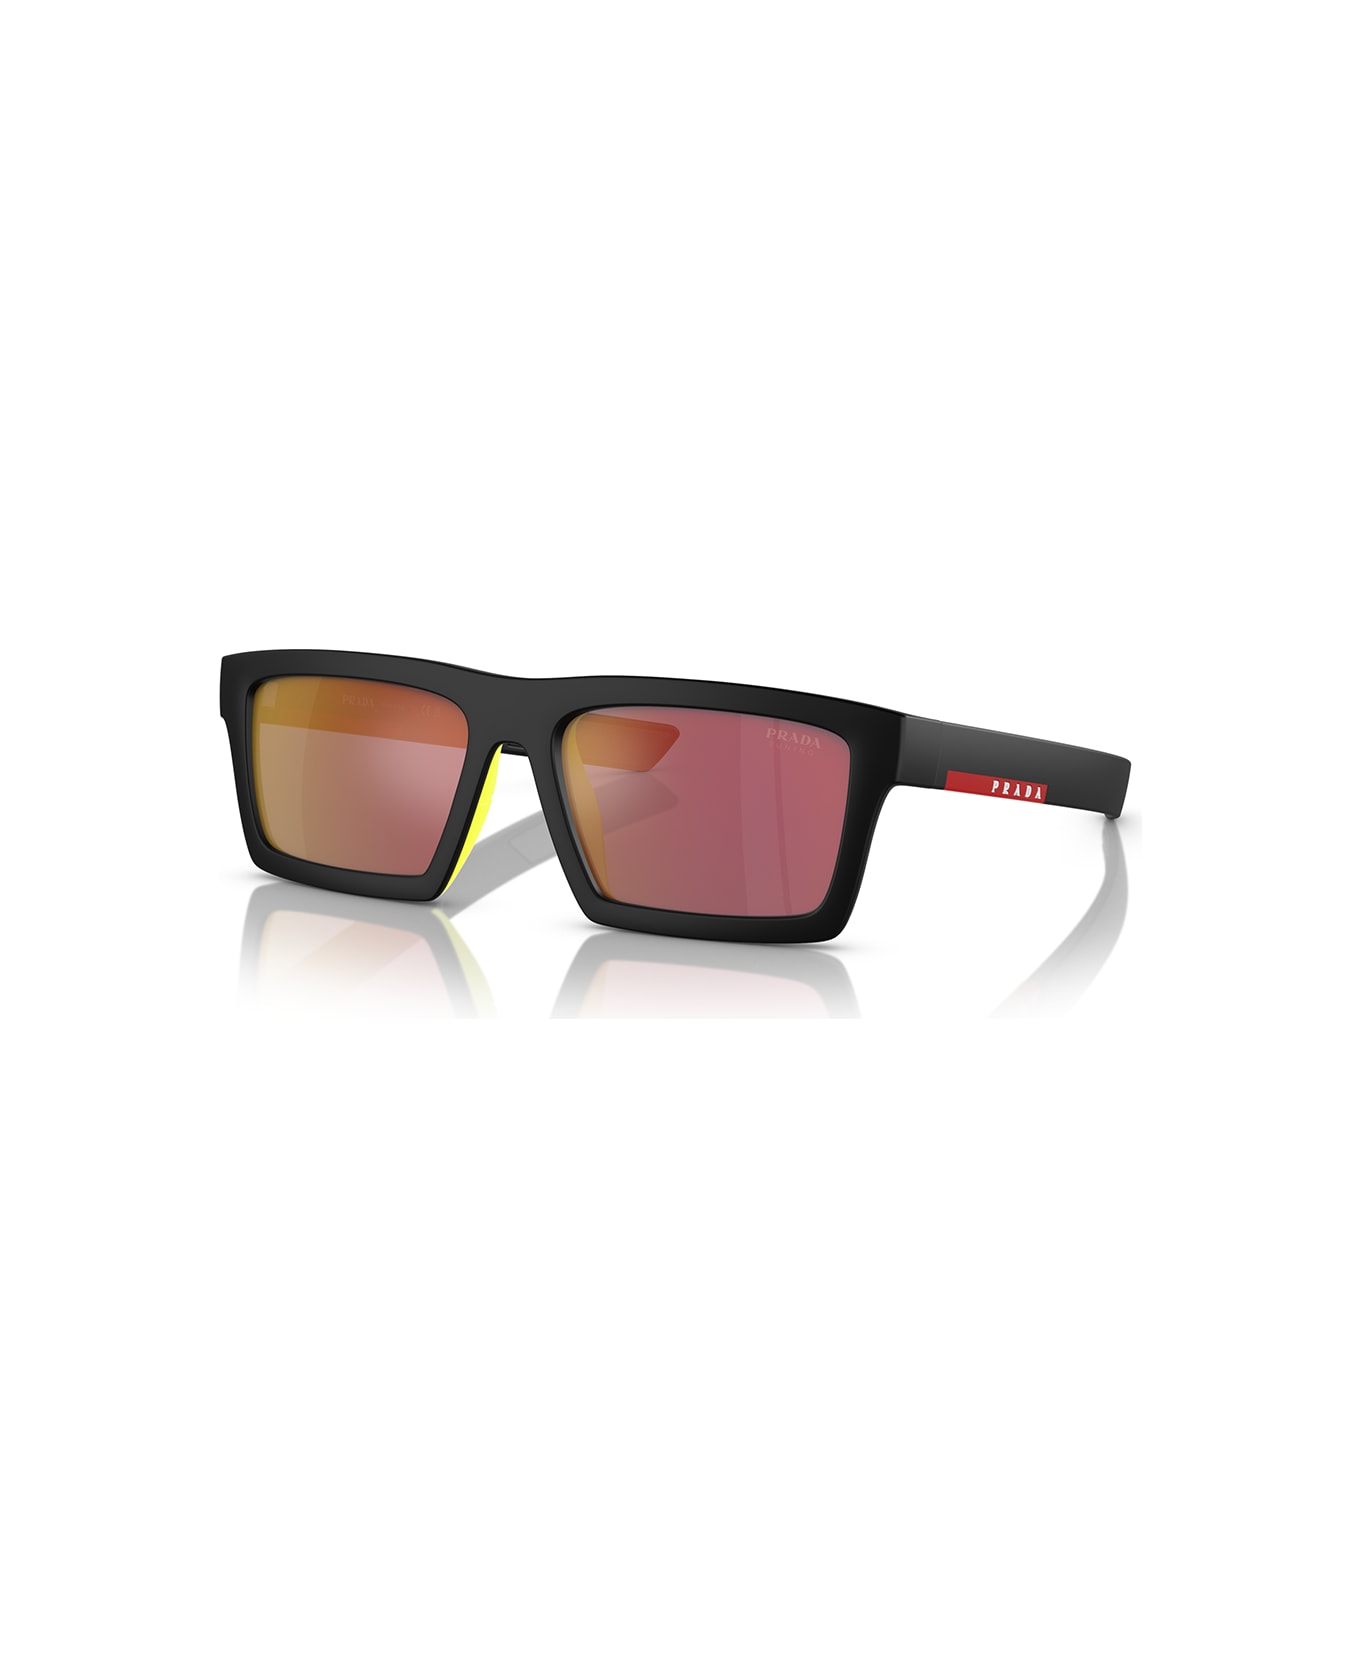 Prada Linea Rossa Sunglasses - Nero/Rosso specchiato サングラス